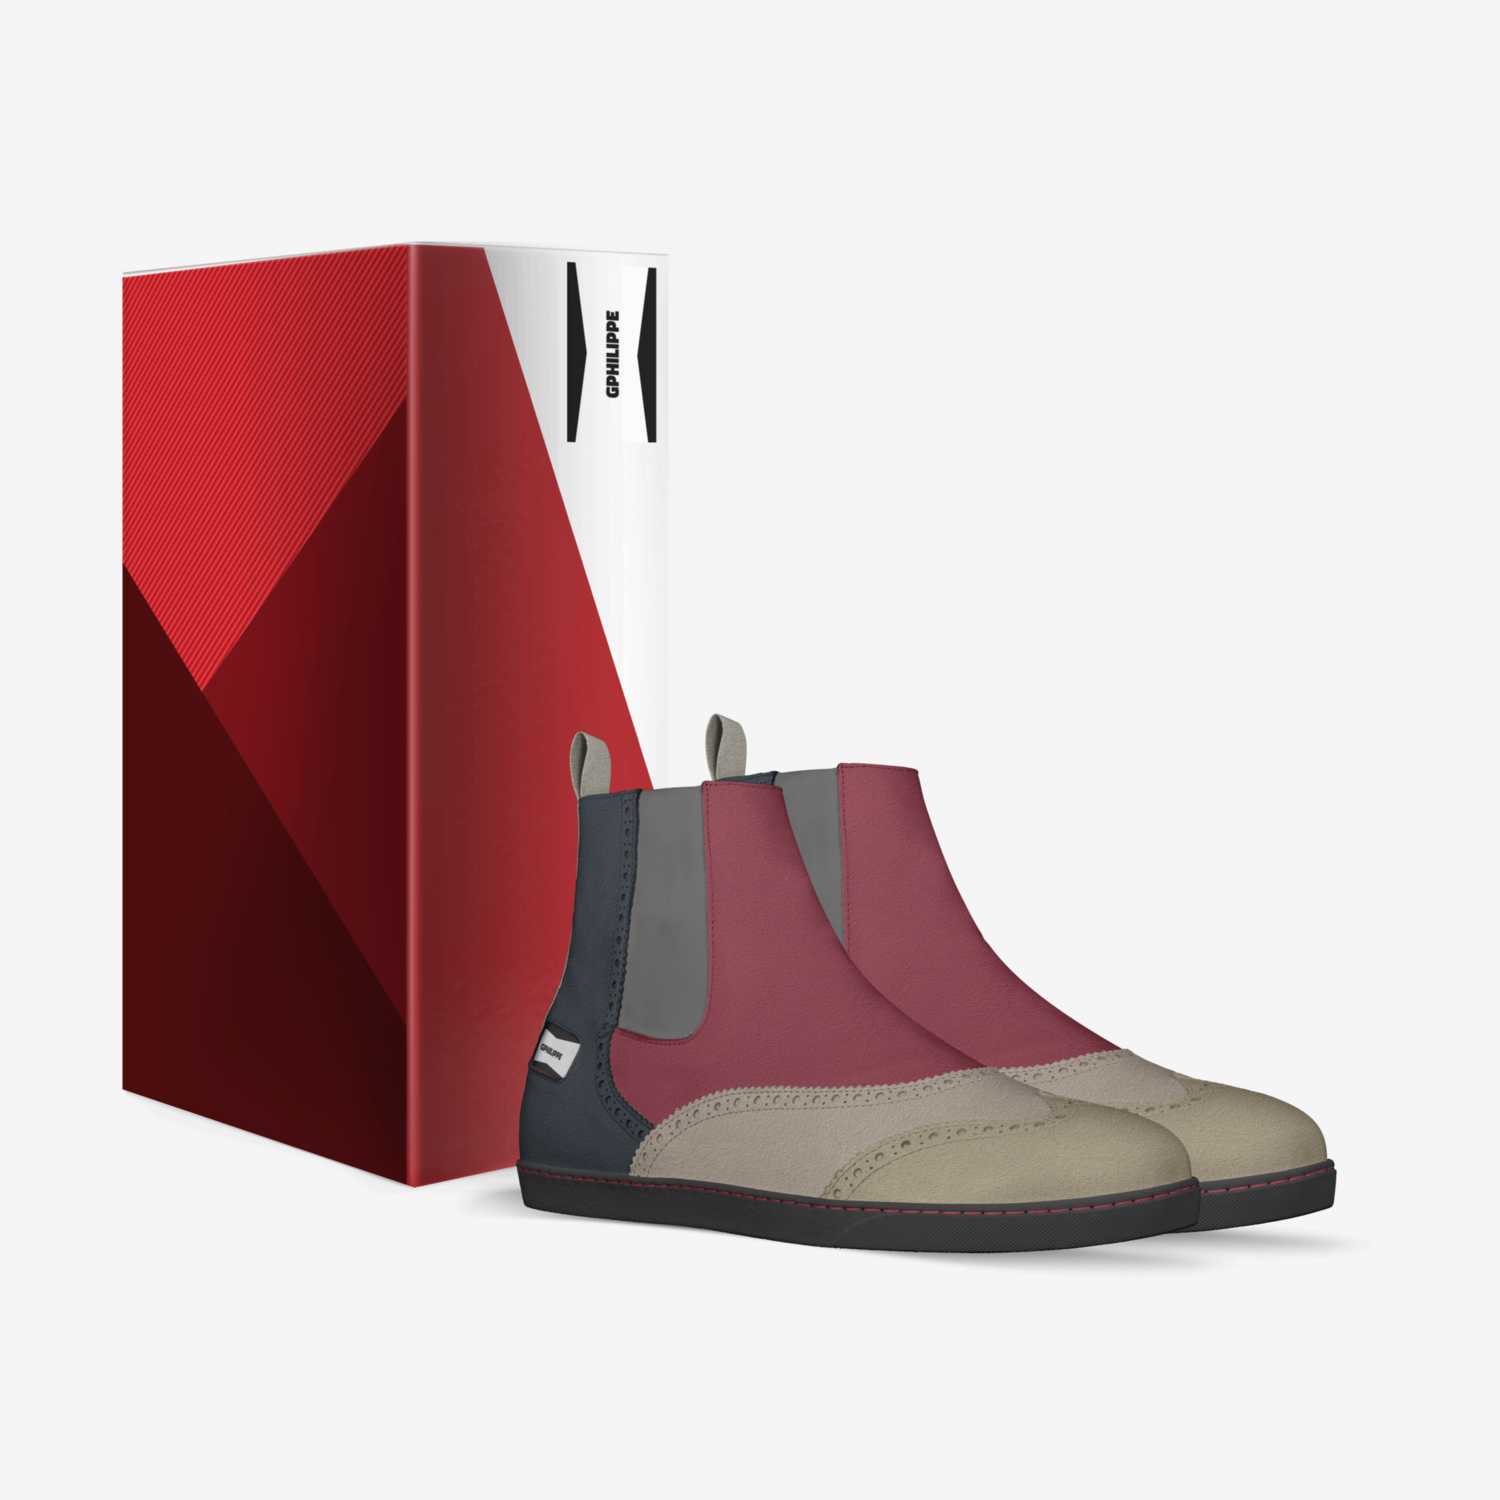 GPHILIPPE custom made in Italy shoes by Gleenda Francis | Box view